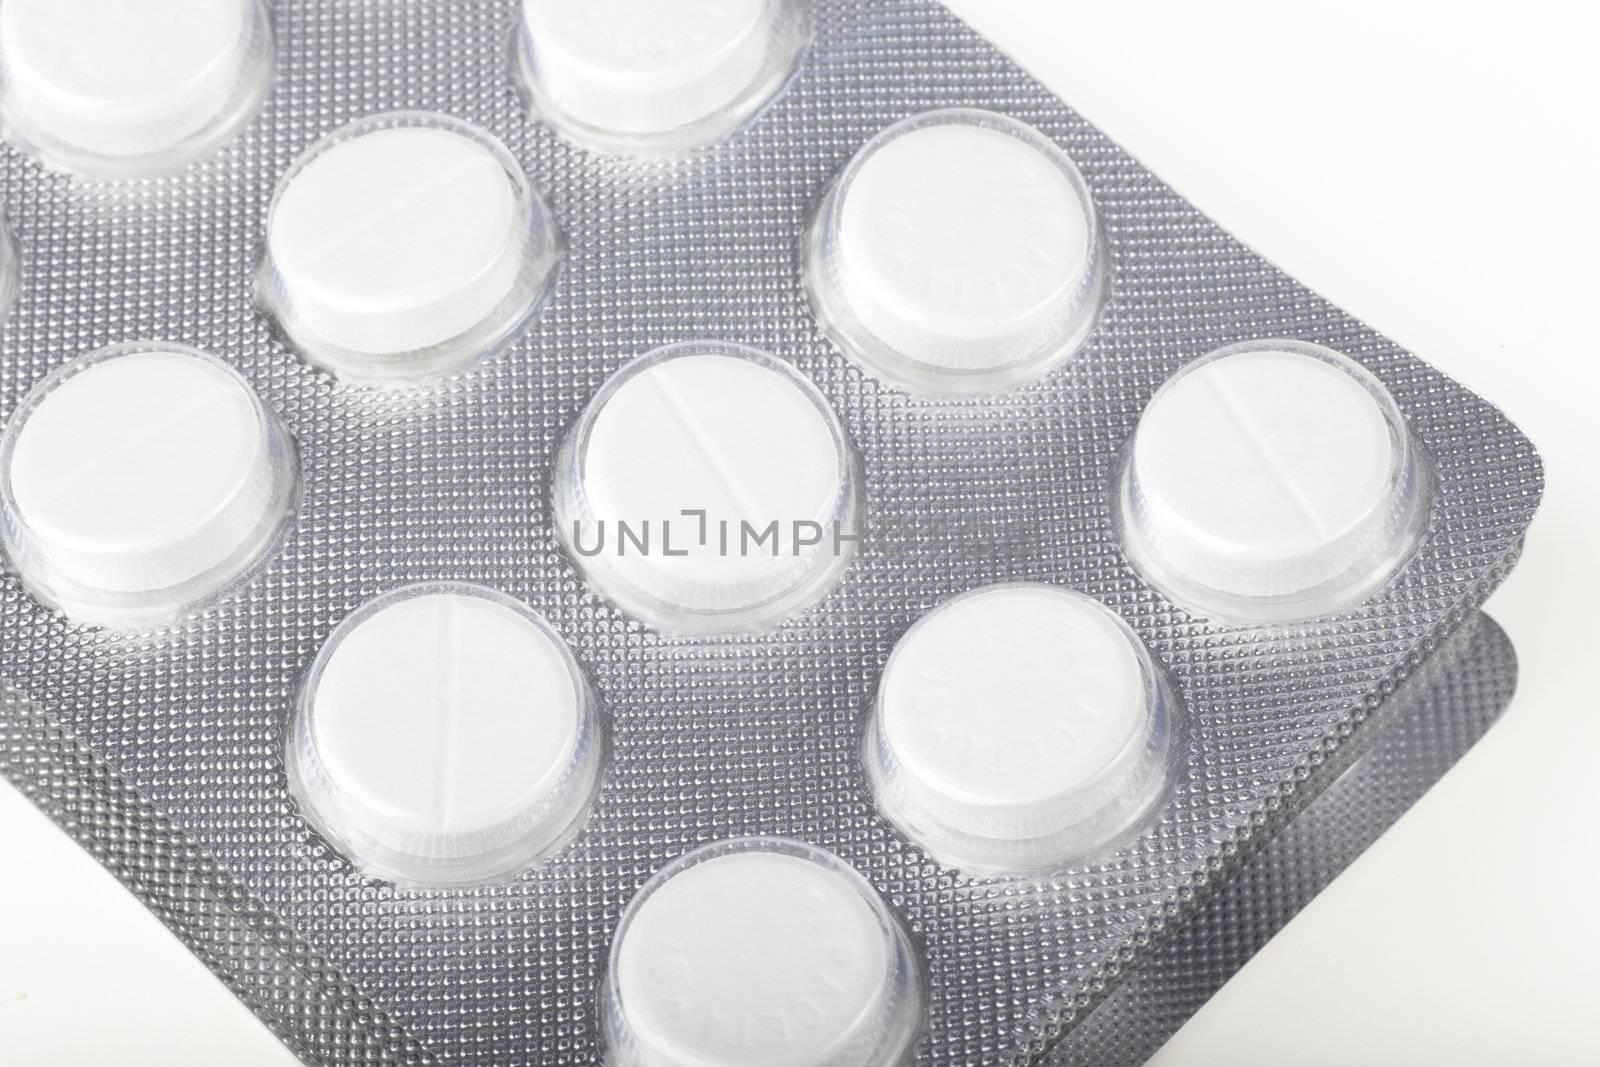 Paracetamol tablets in foil bubble packaging.